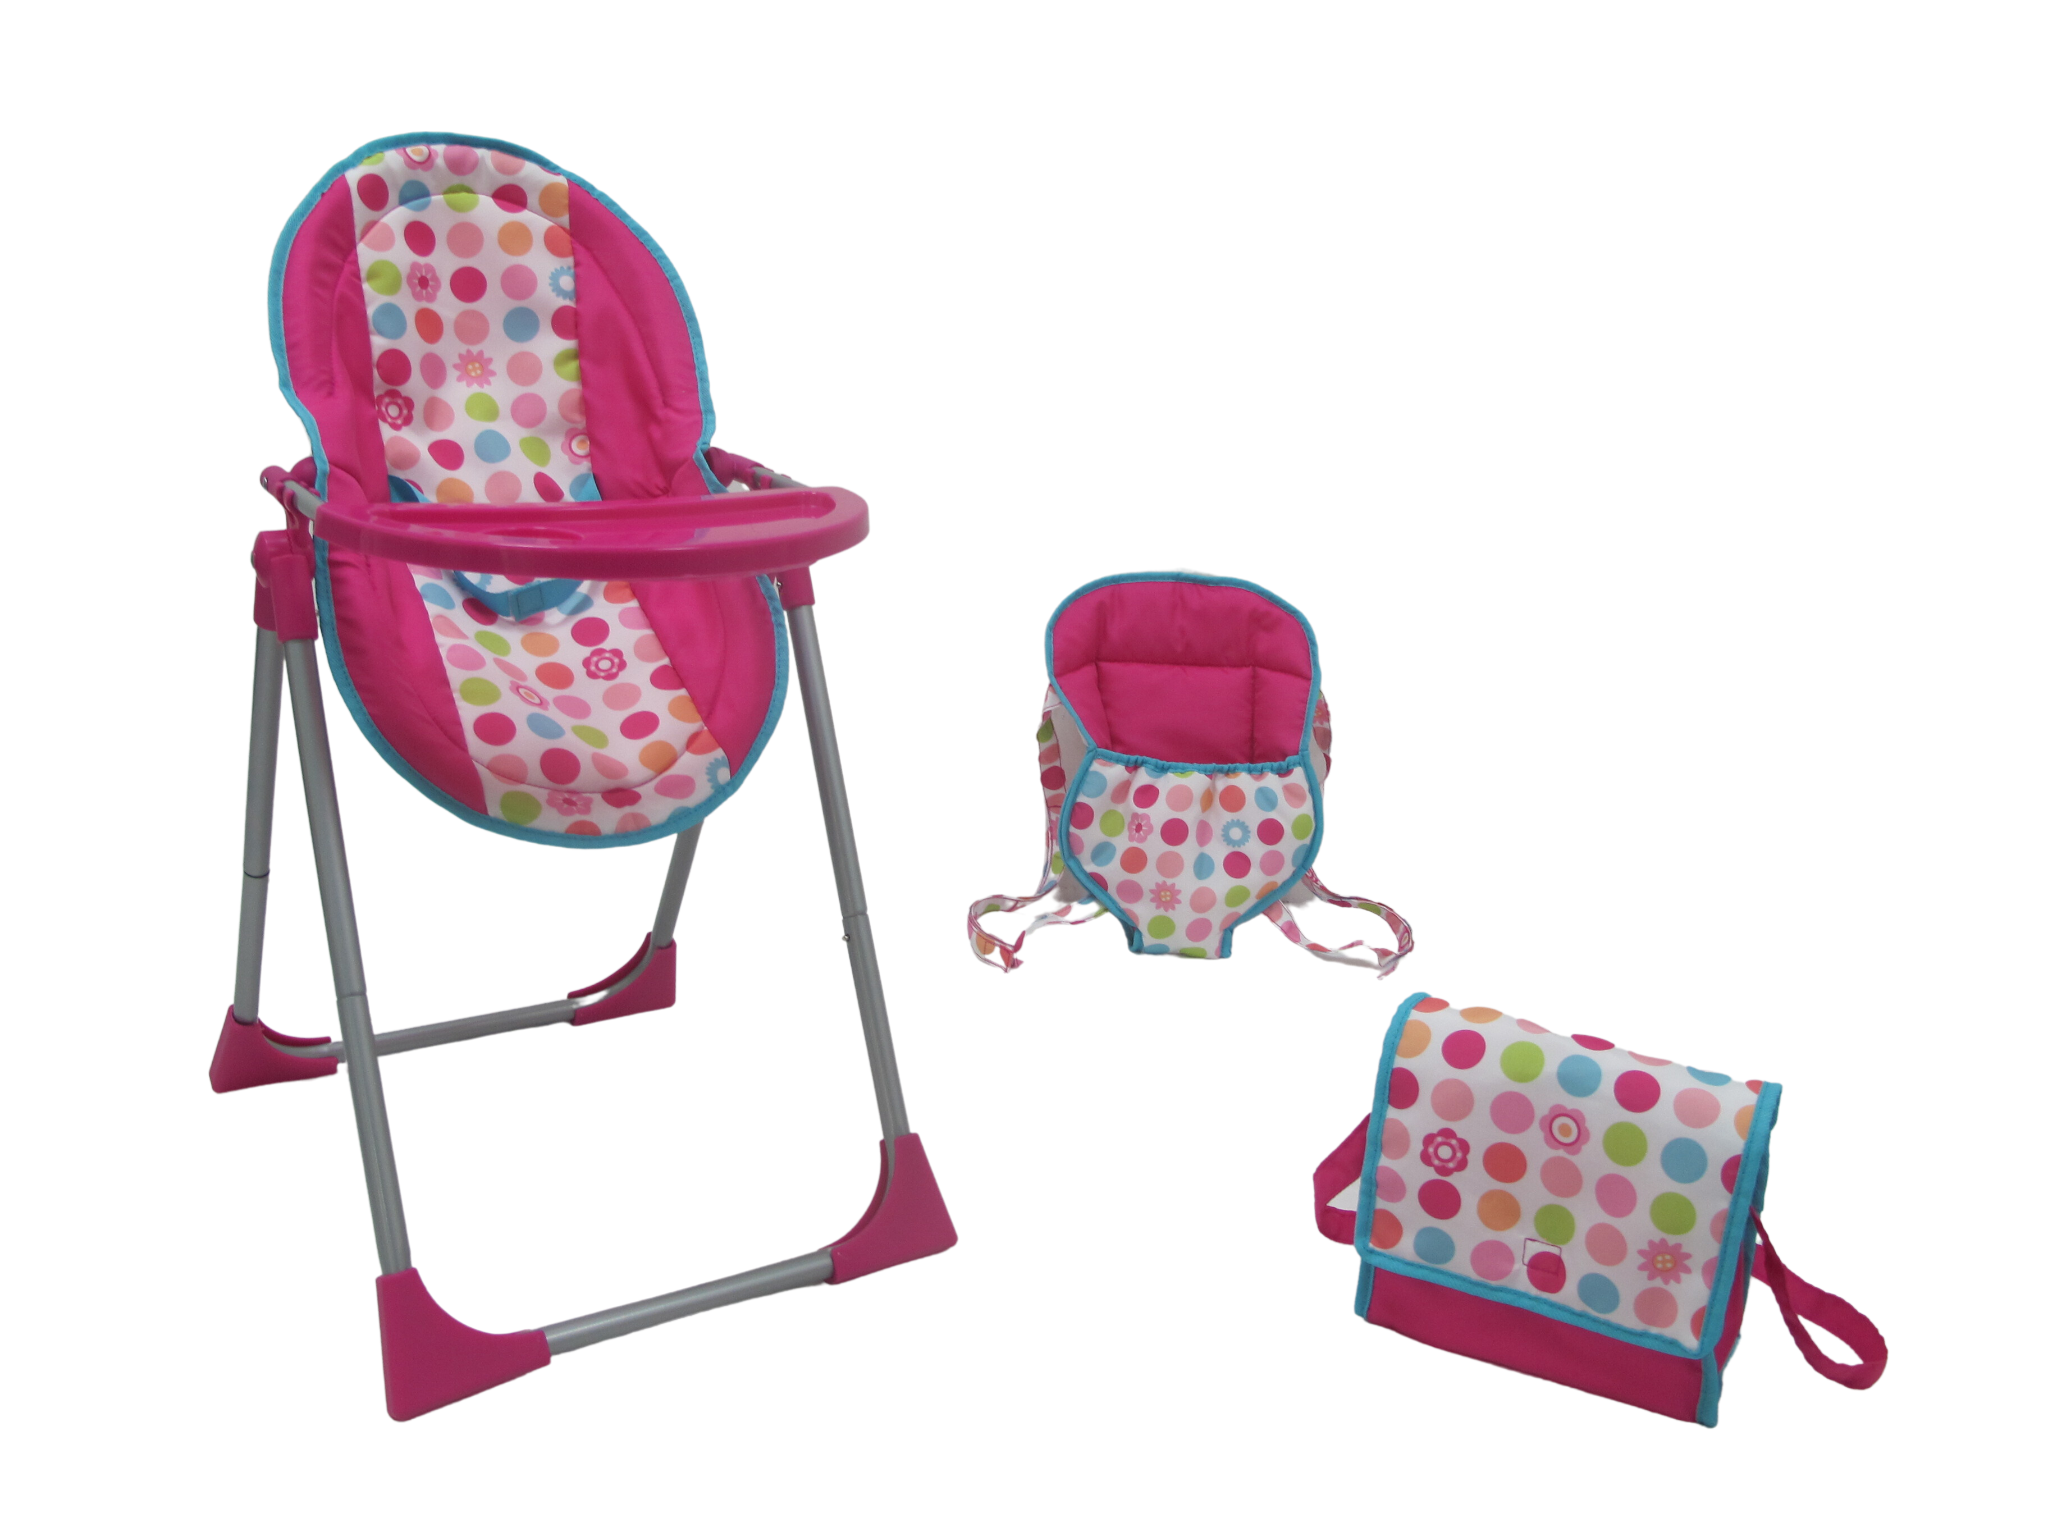 KOOKAMUNGA KIDS 5 in 1 Baby Doll High Chair Playset